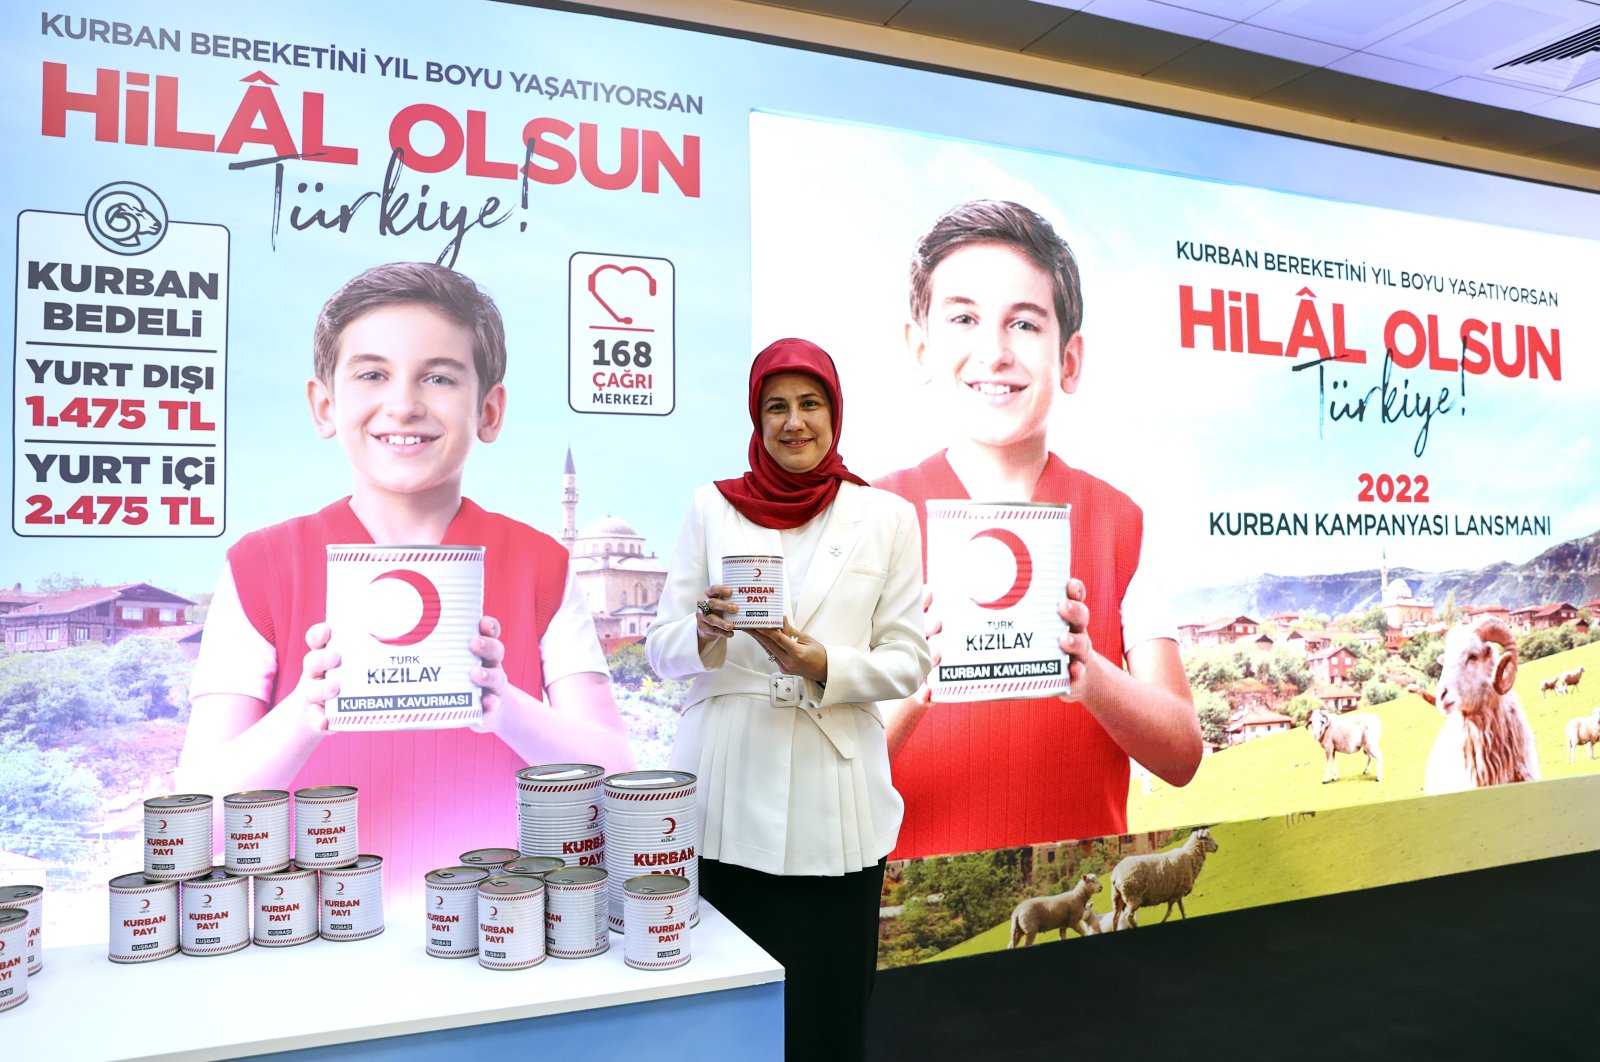 Bulan Sabit Merah Turki menjangkau dunia untuk bantuan liburan Islam